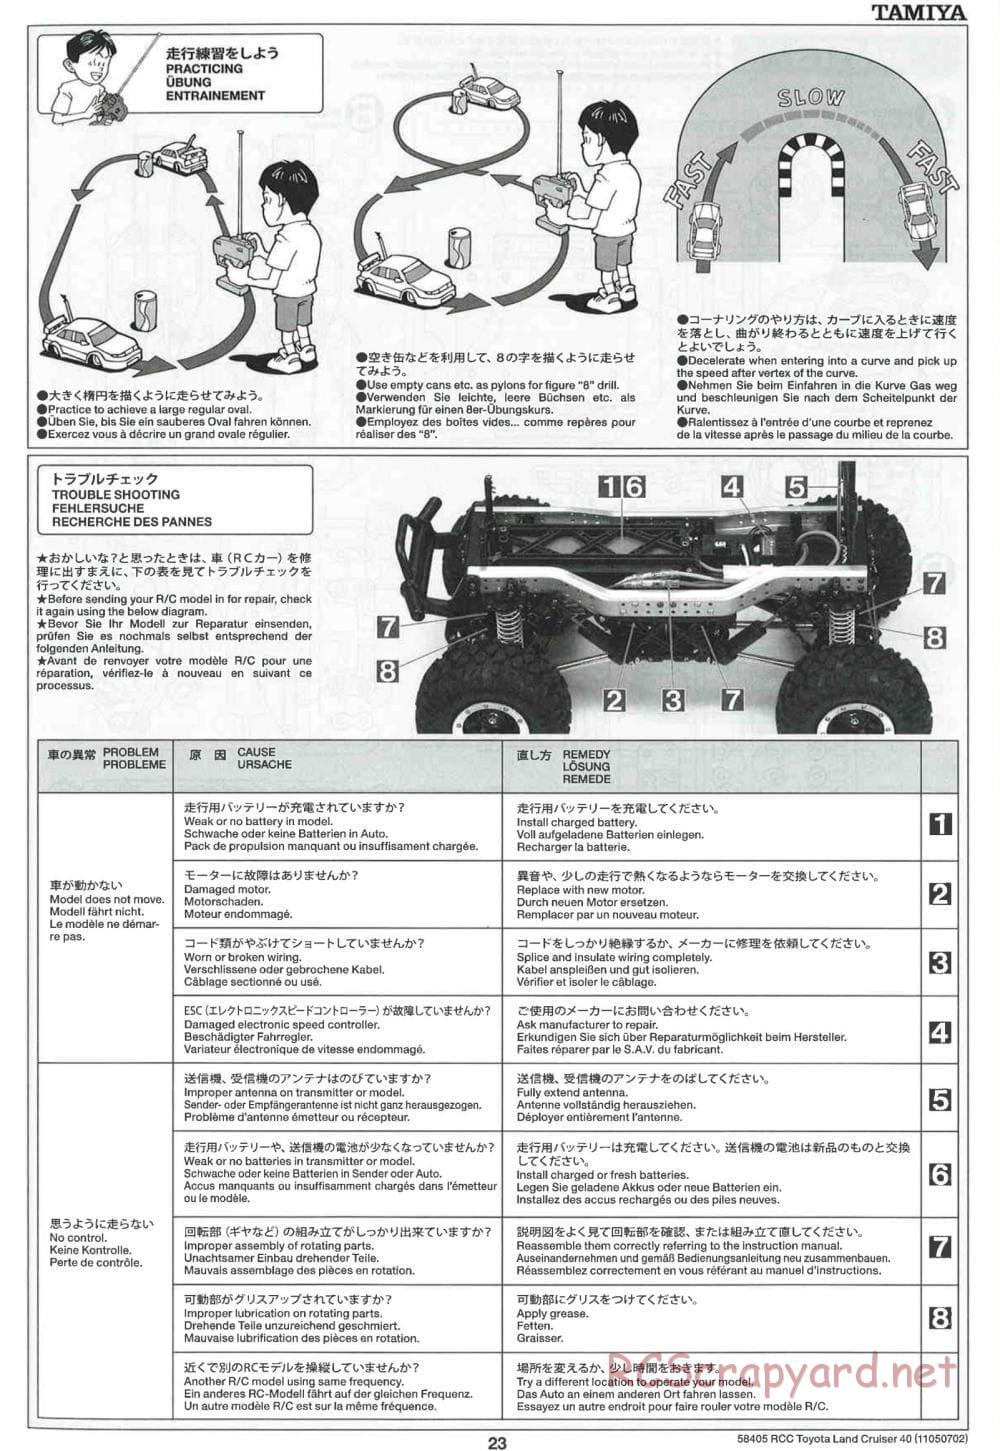 Tamiya - Toyota Land Cruiser 40 - CR-01 Chassis - Manual - Page 23